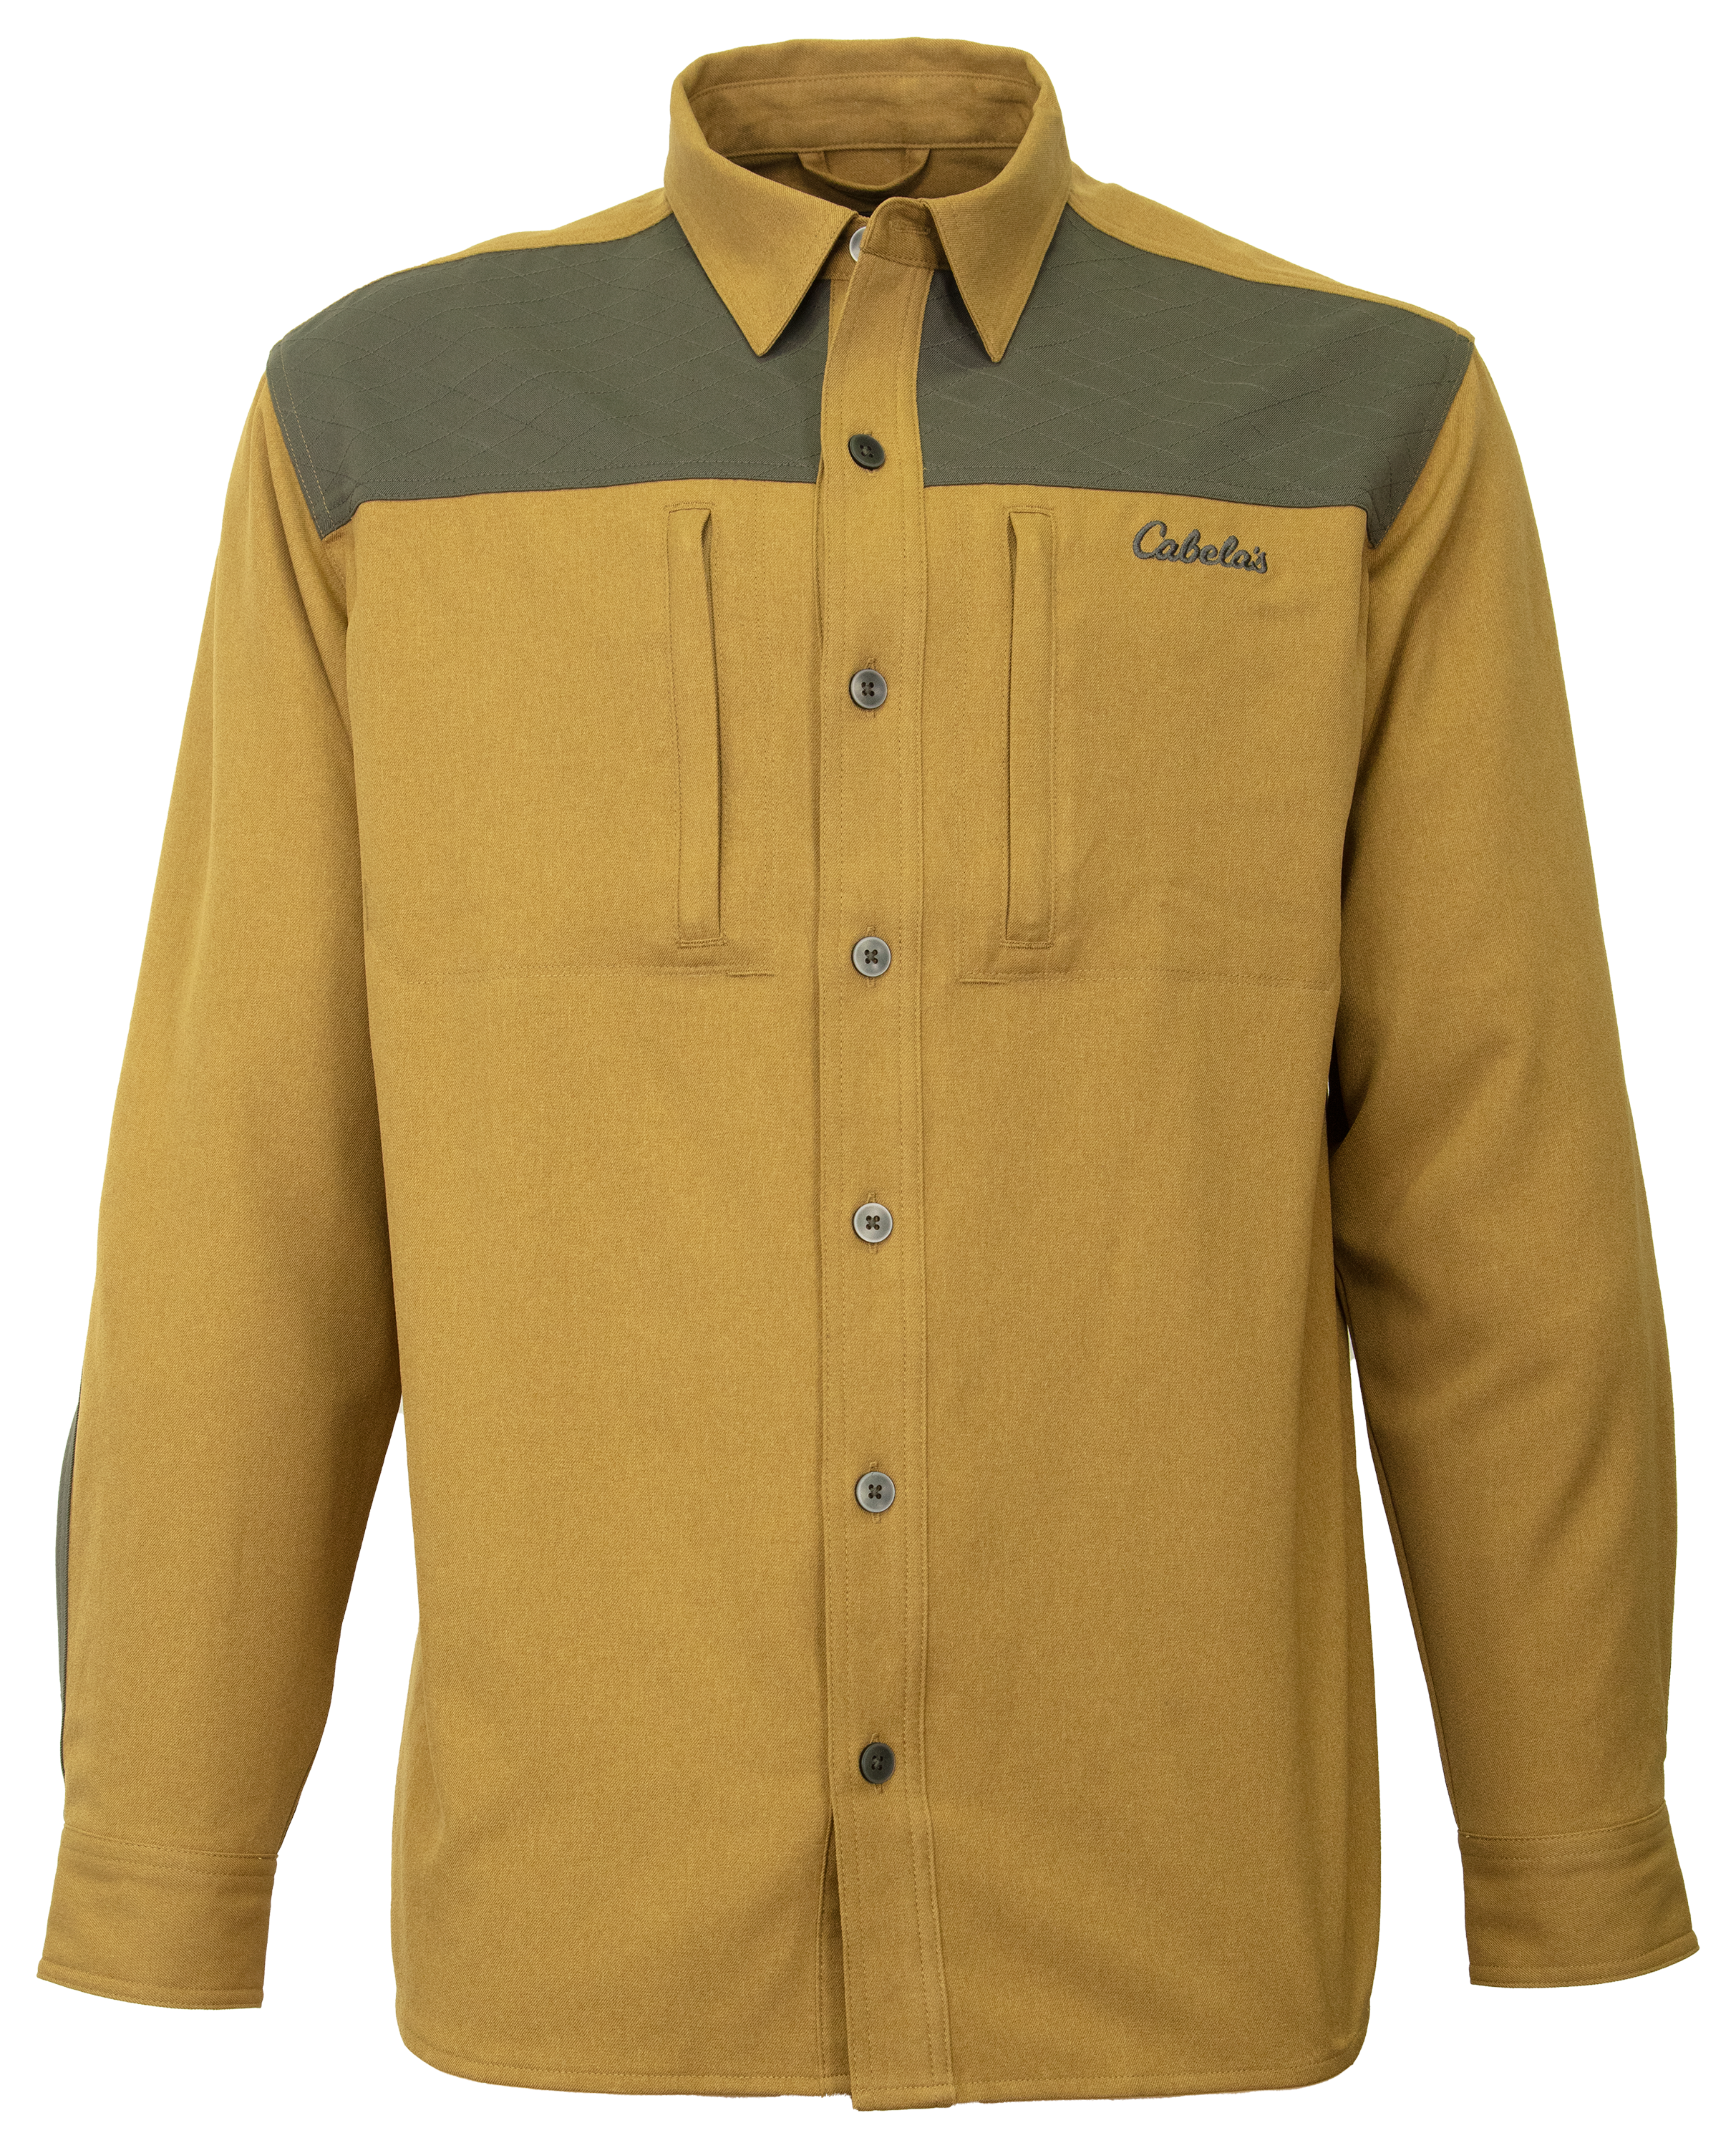 Cabela's Hunting Shirt for Men - Beluga w/Dull Gold Overlay - M